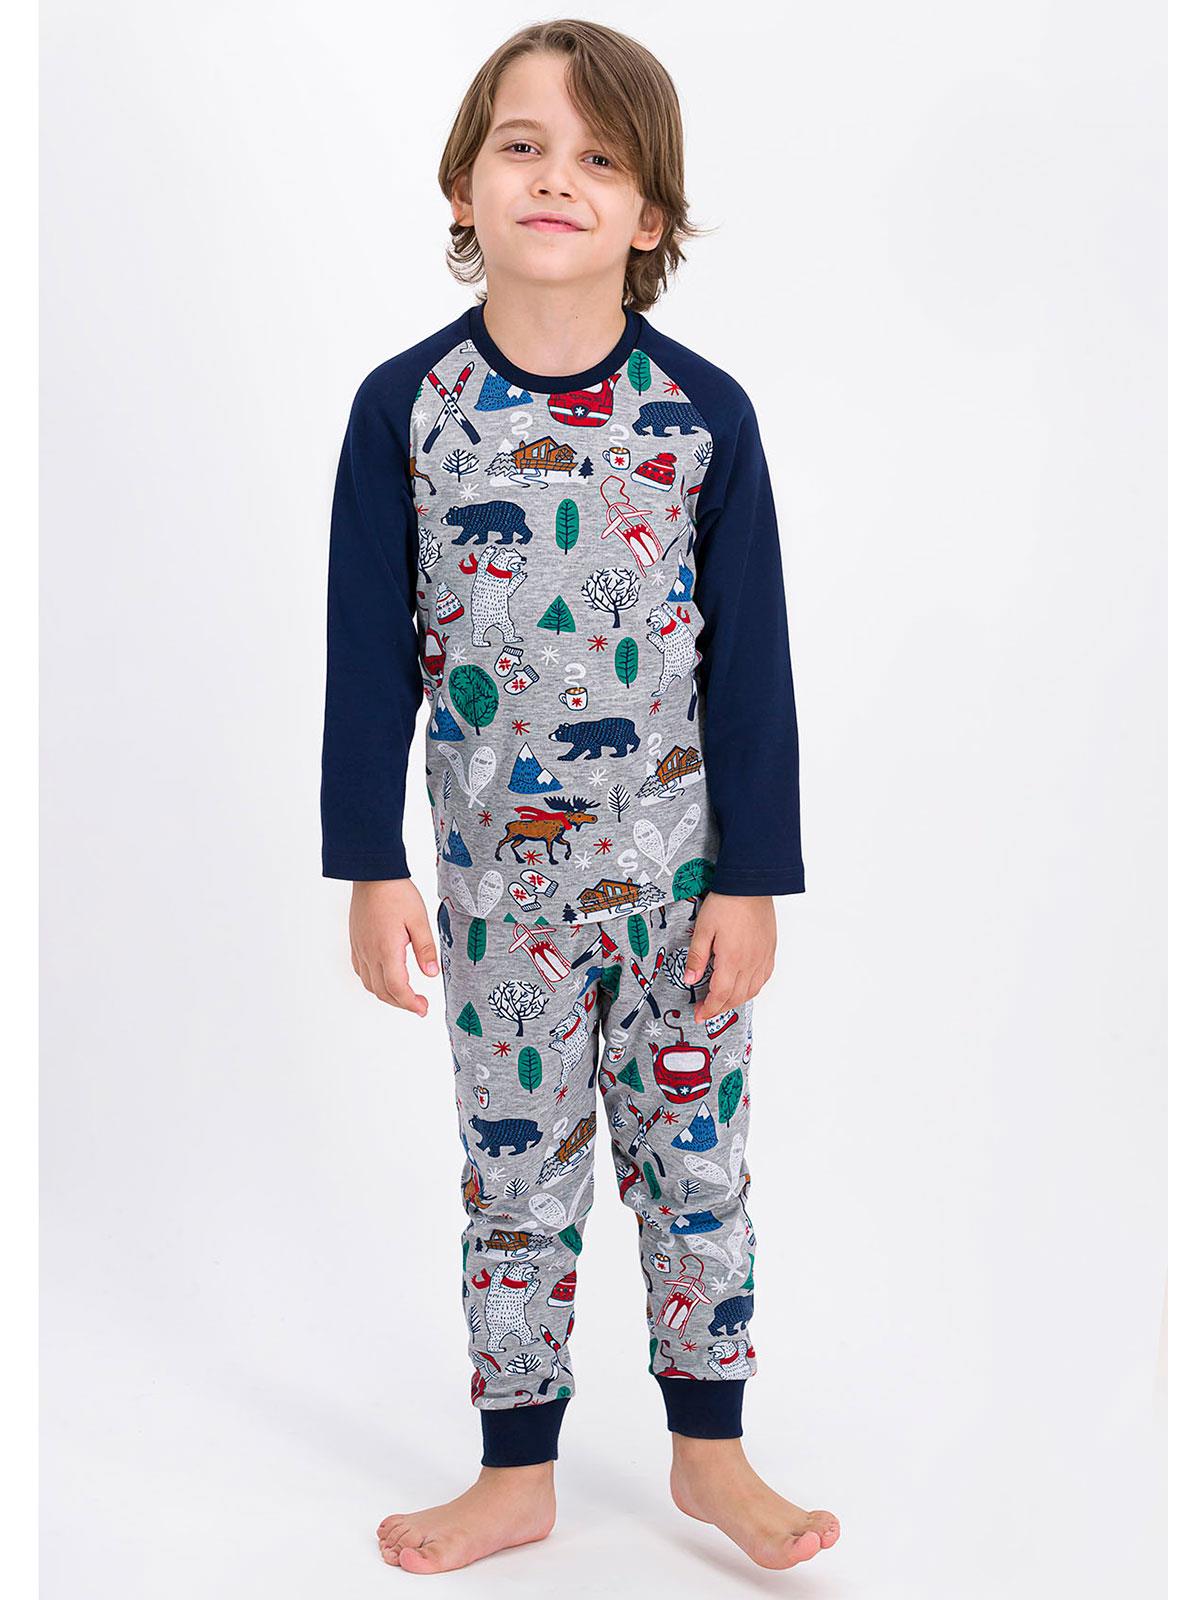 Roly Poly Erkek Çocuk Pijama Takımı 2-7 Yaş Gri